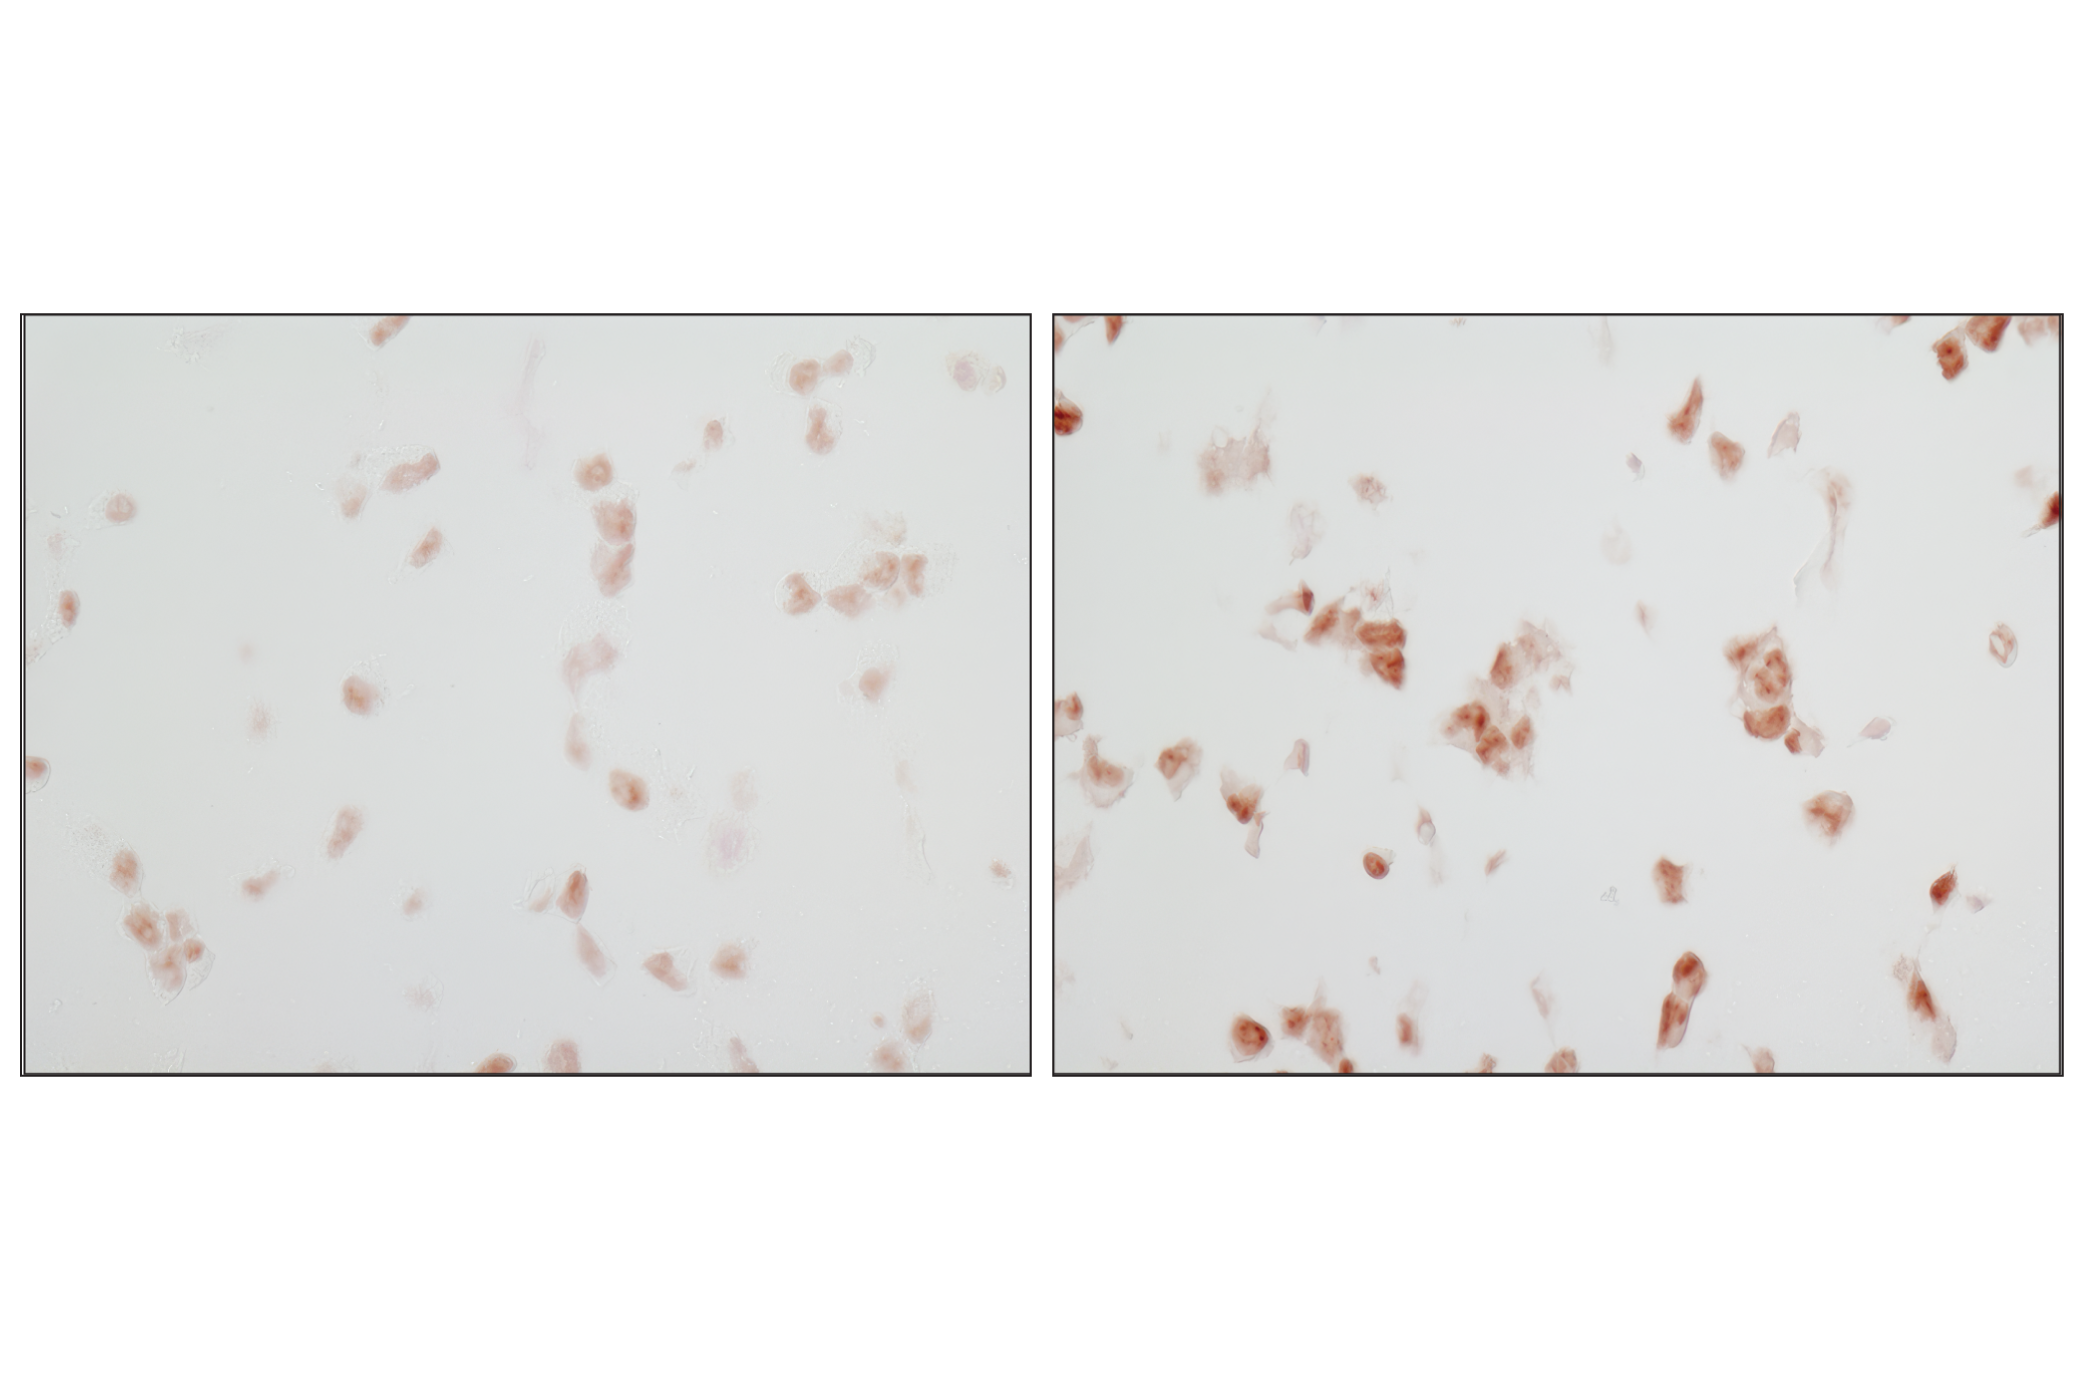  Image 14: Phospho-MAPK Family Antibody Sampler Kit